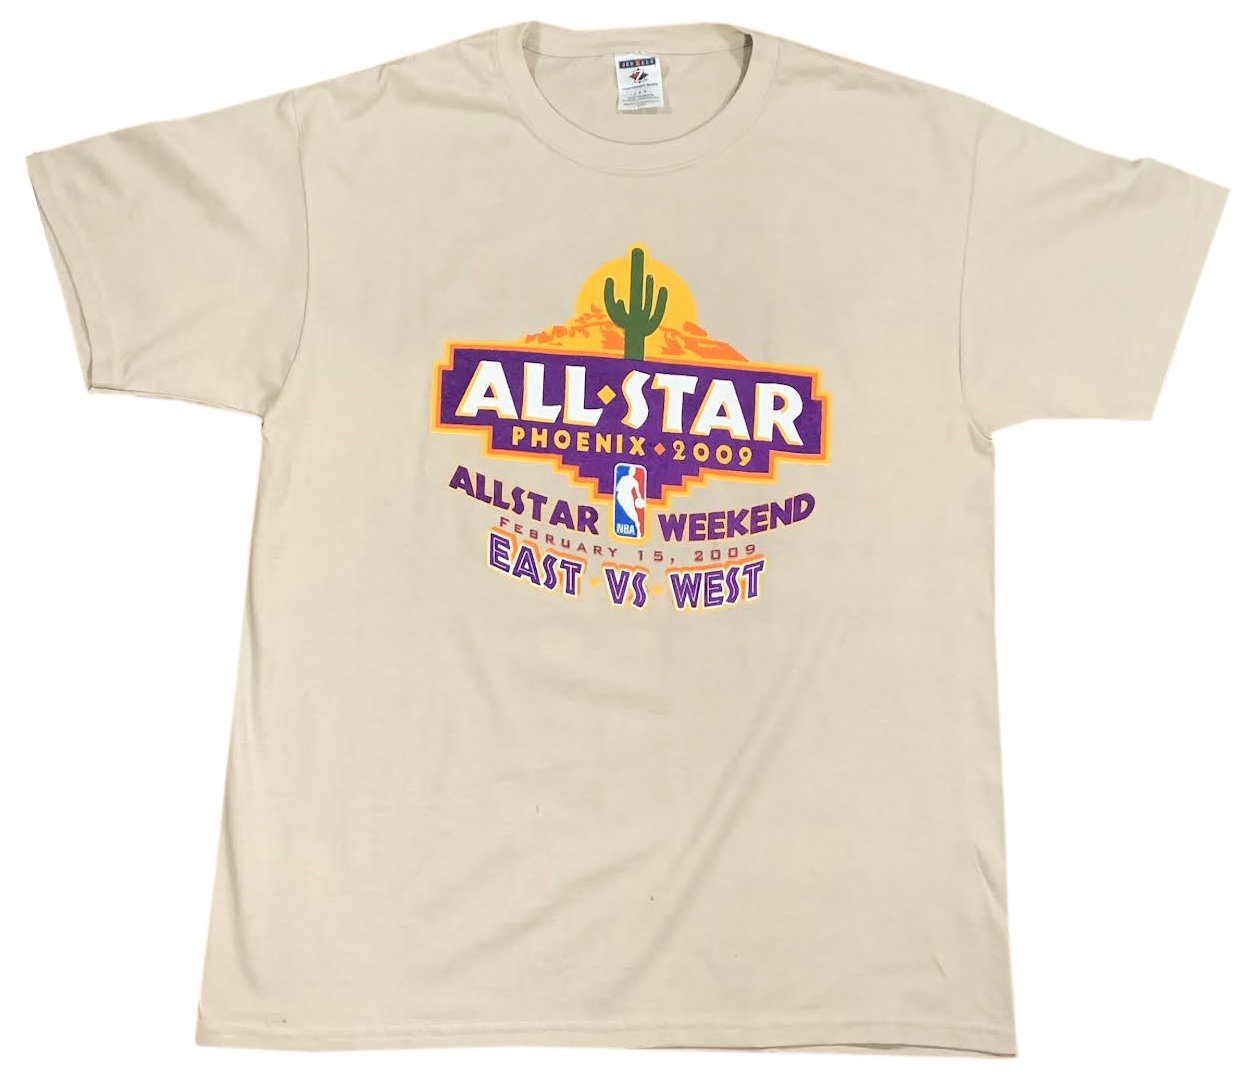 NBAAllStar on X: #TBTThe Big Three for the @celtics at the 2009 # NBAAllStar game.  / X